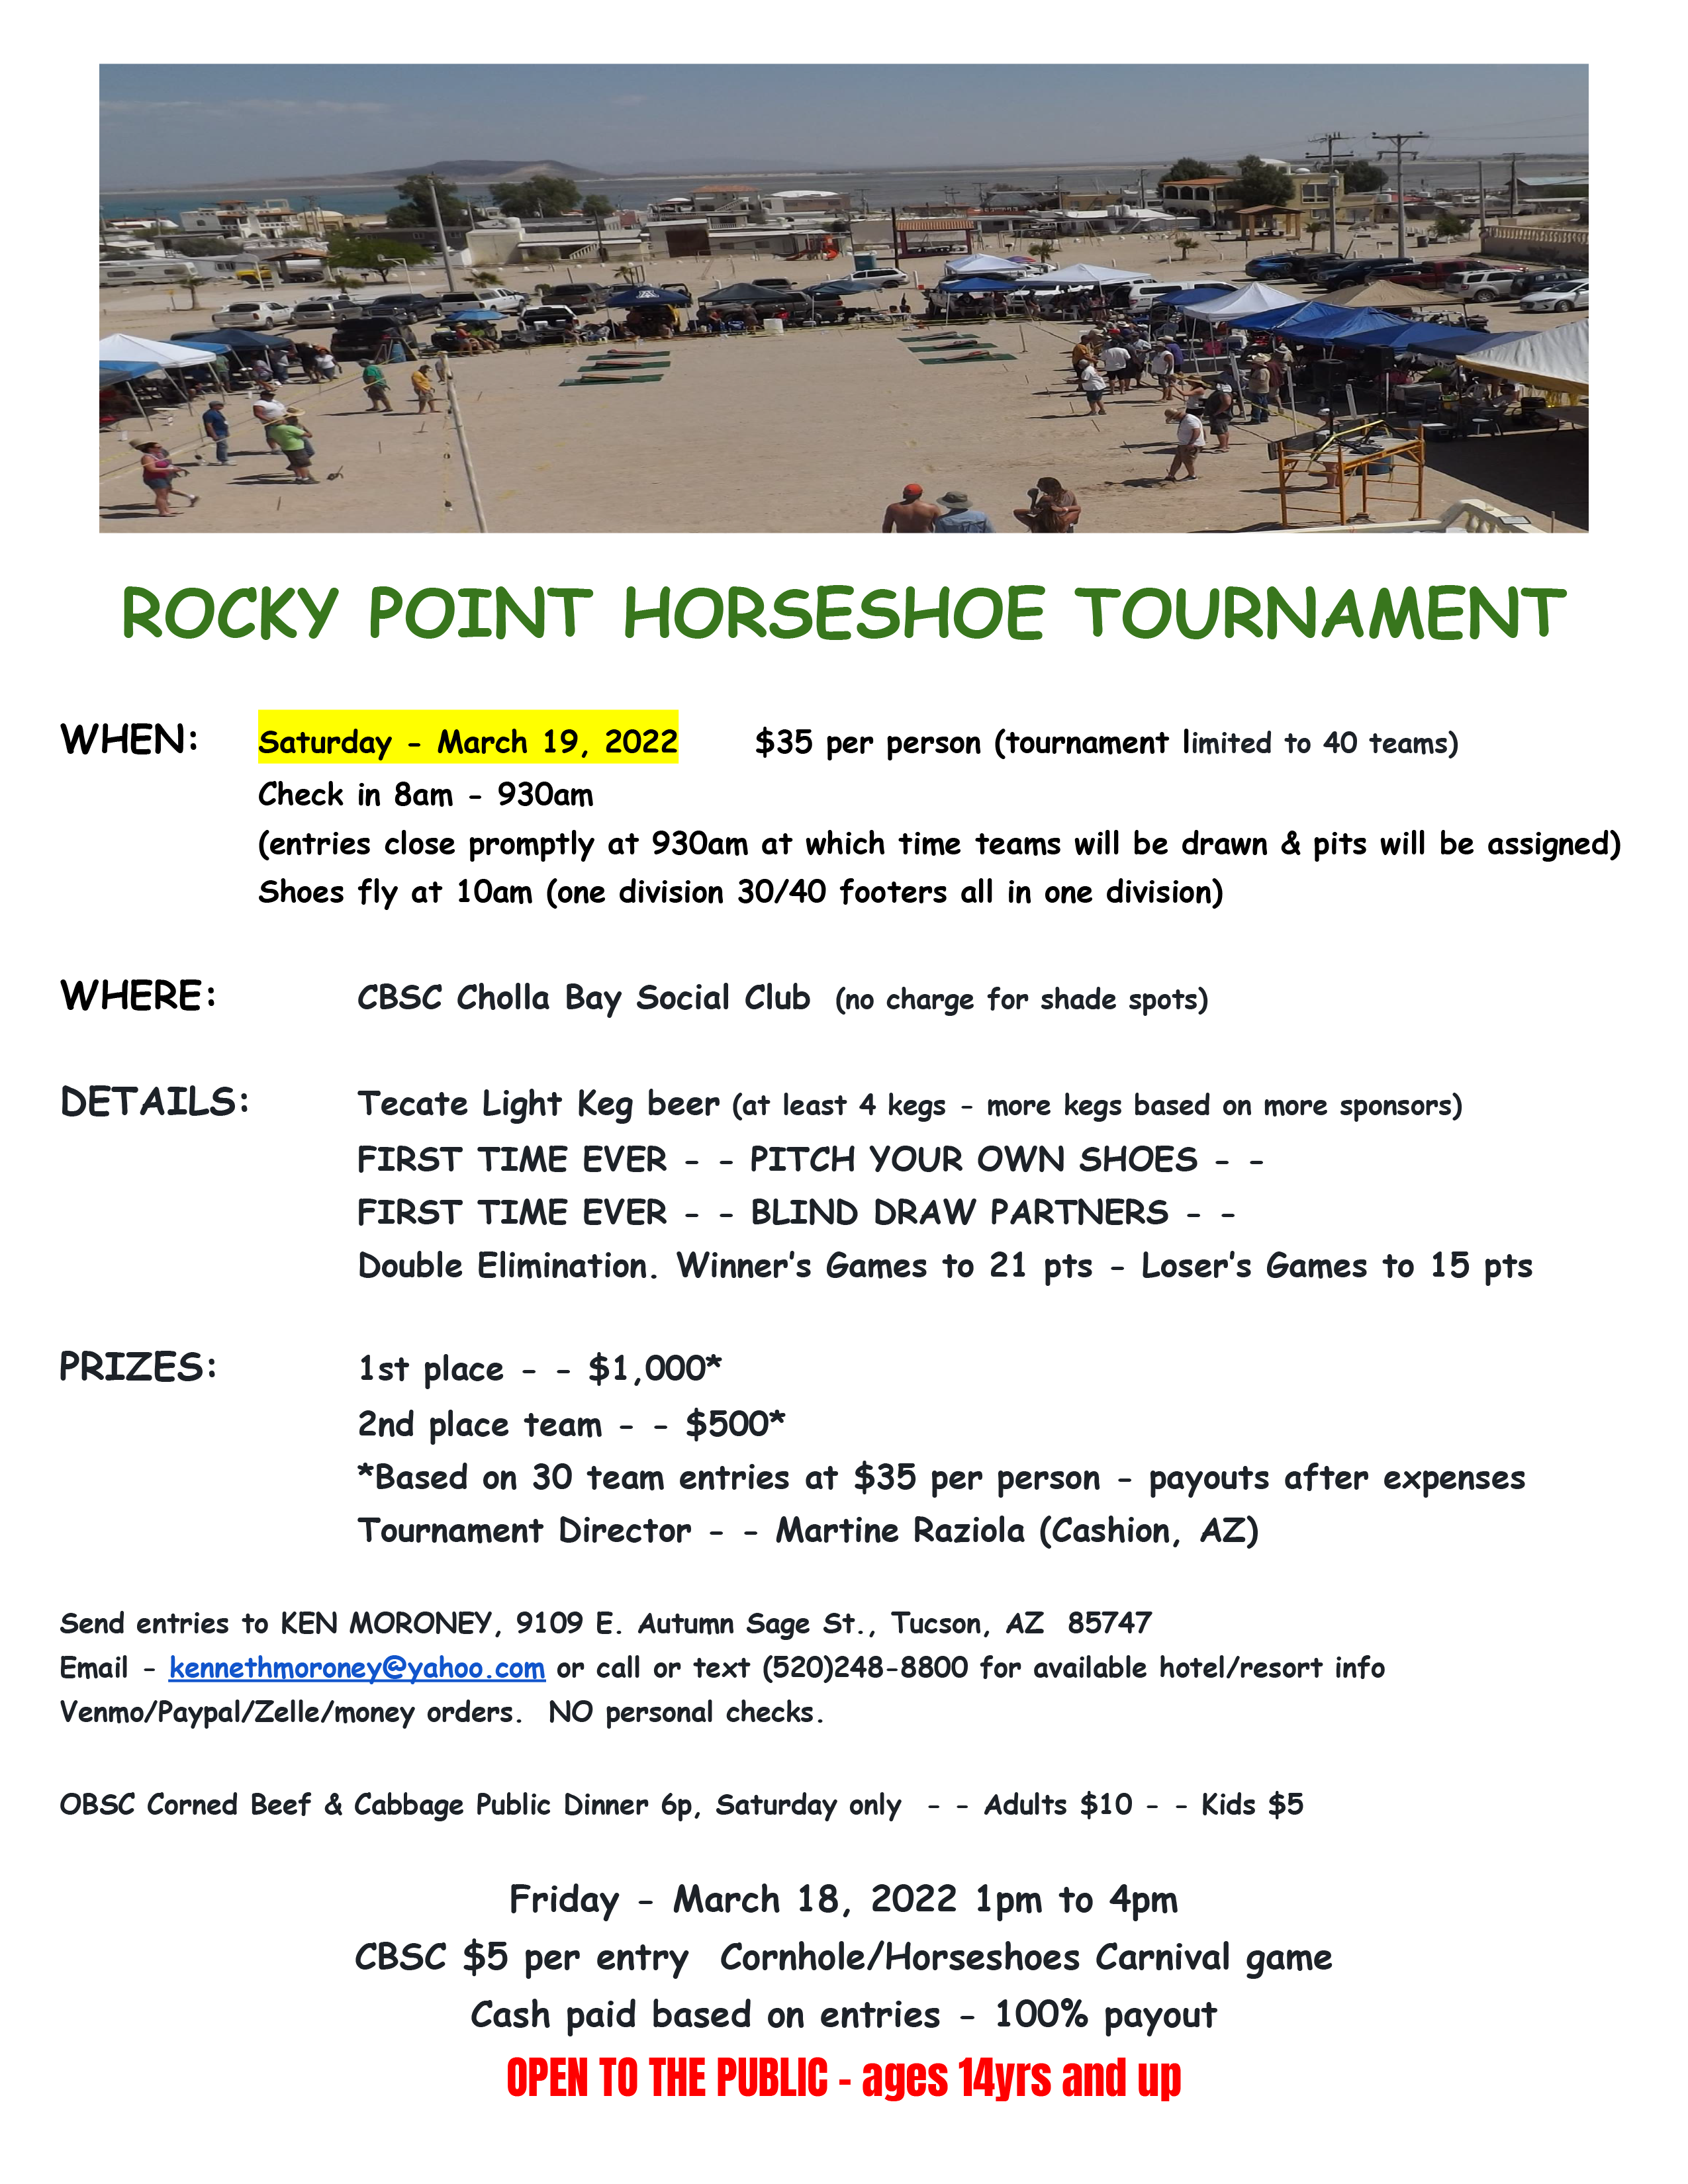 CBSC-HORSESHOE-TOURNAMENT-22 Rocky Point Horse Shoe Tournament